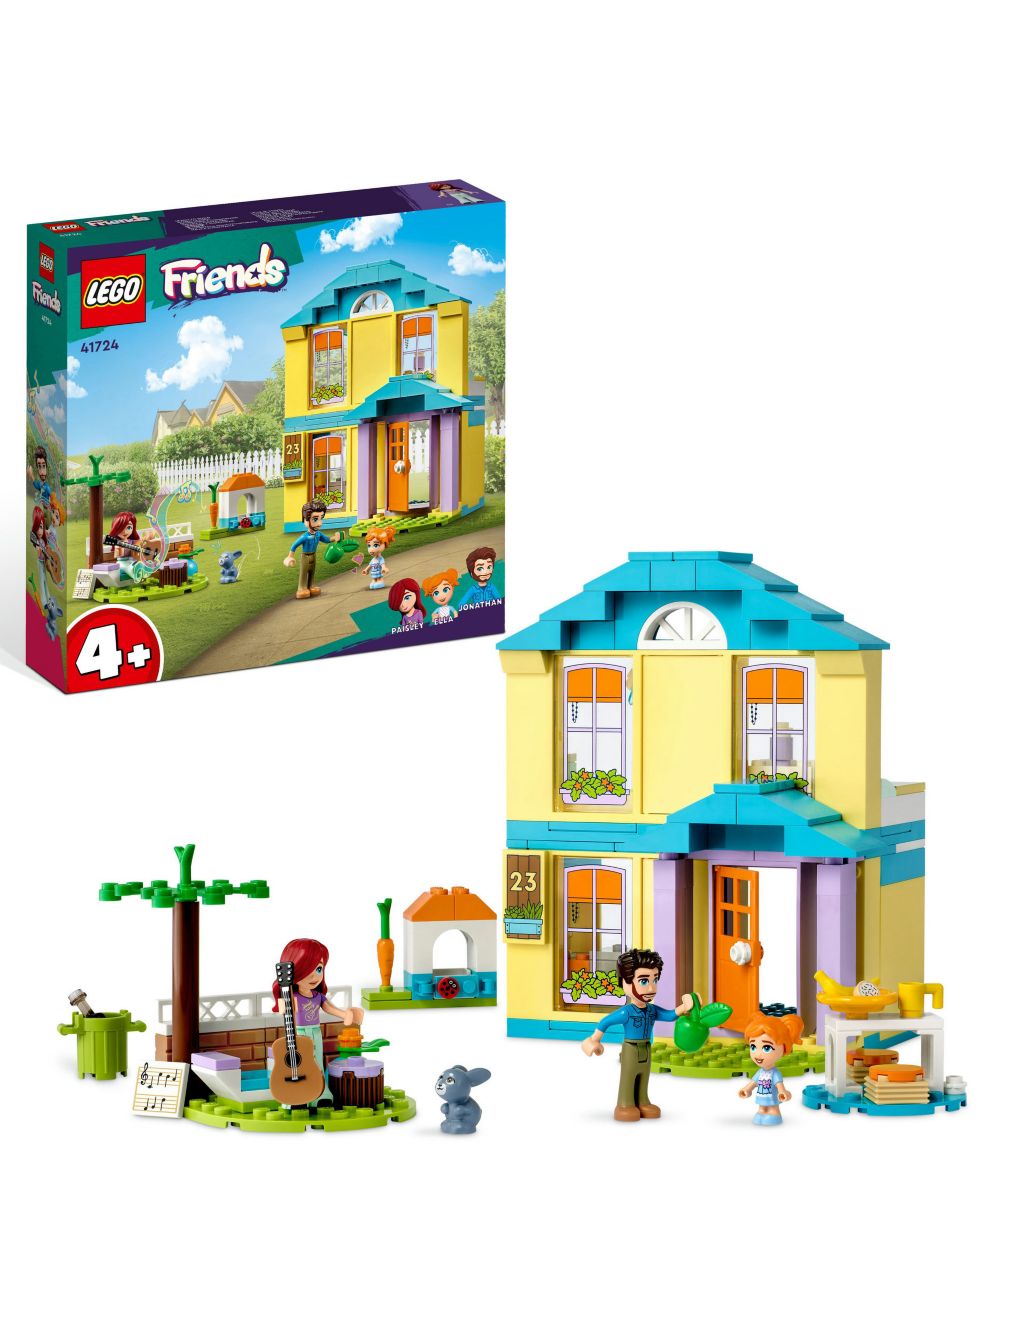 LEGO Friends Paisley's House Dolls House Set (4+ Yrs) image 1